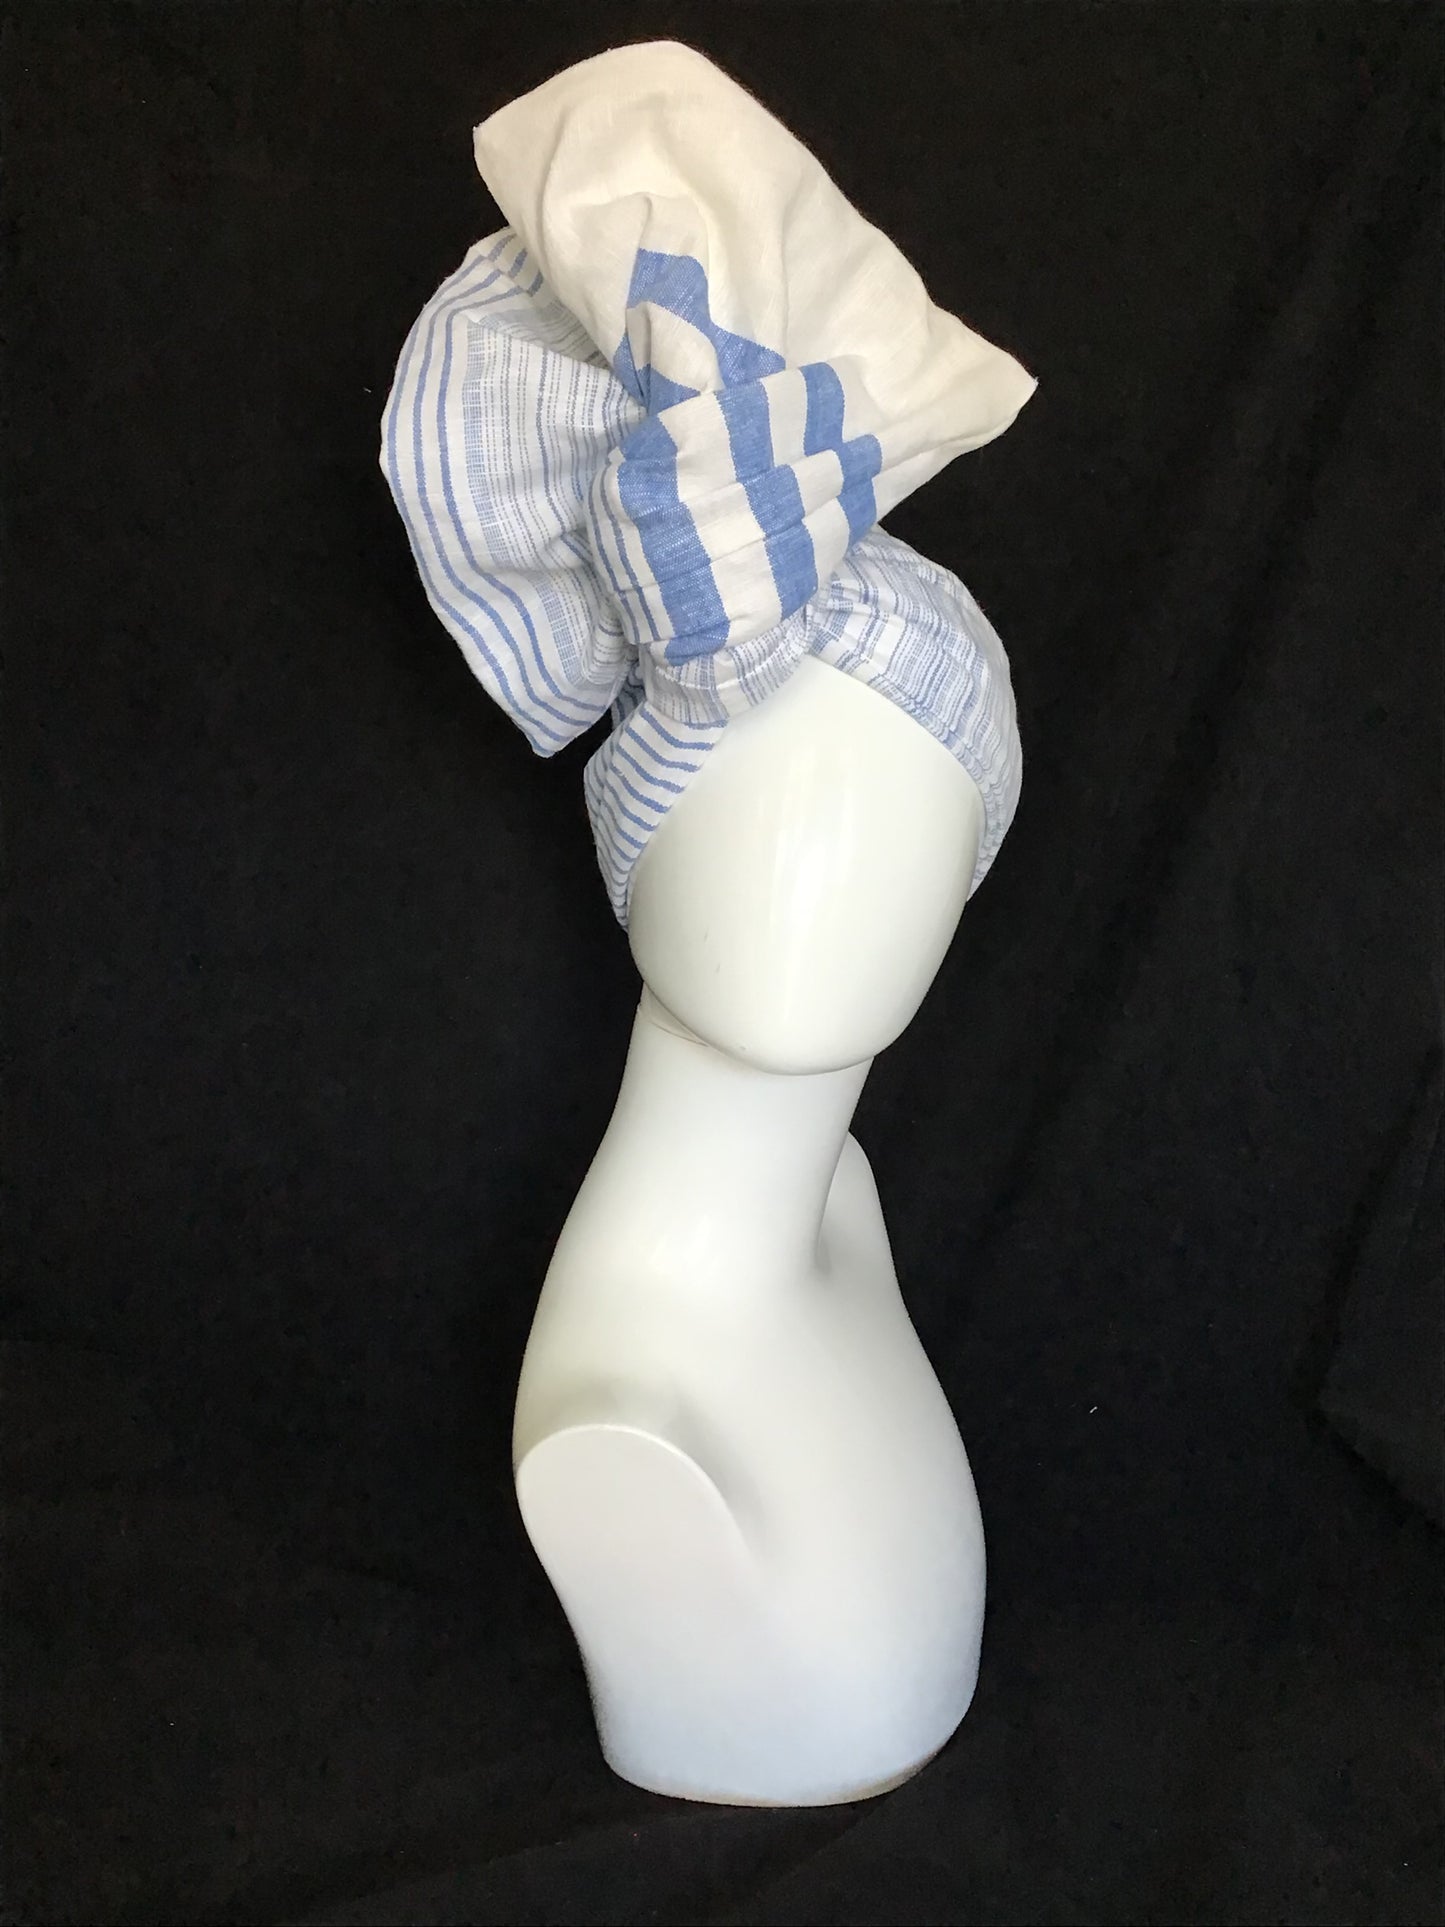 Linen Twisturban® in blue and white stripe